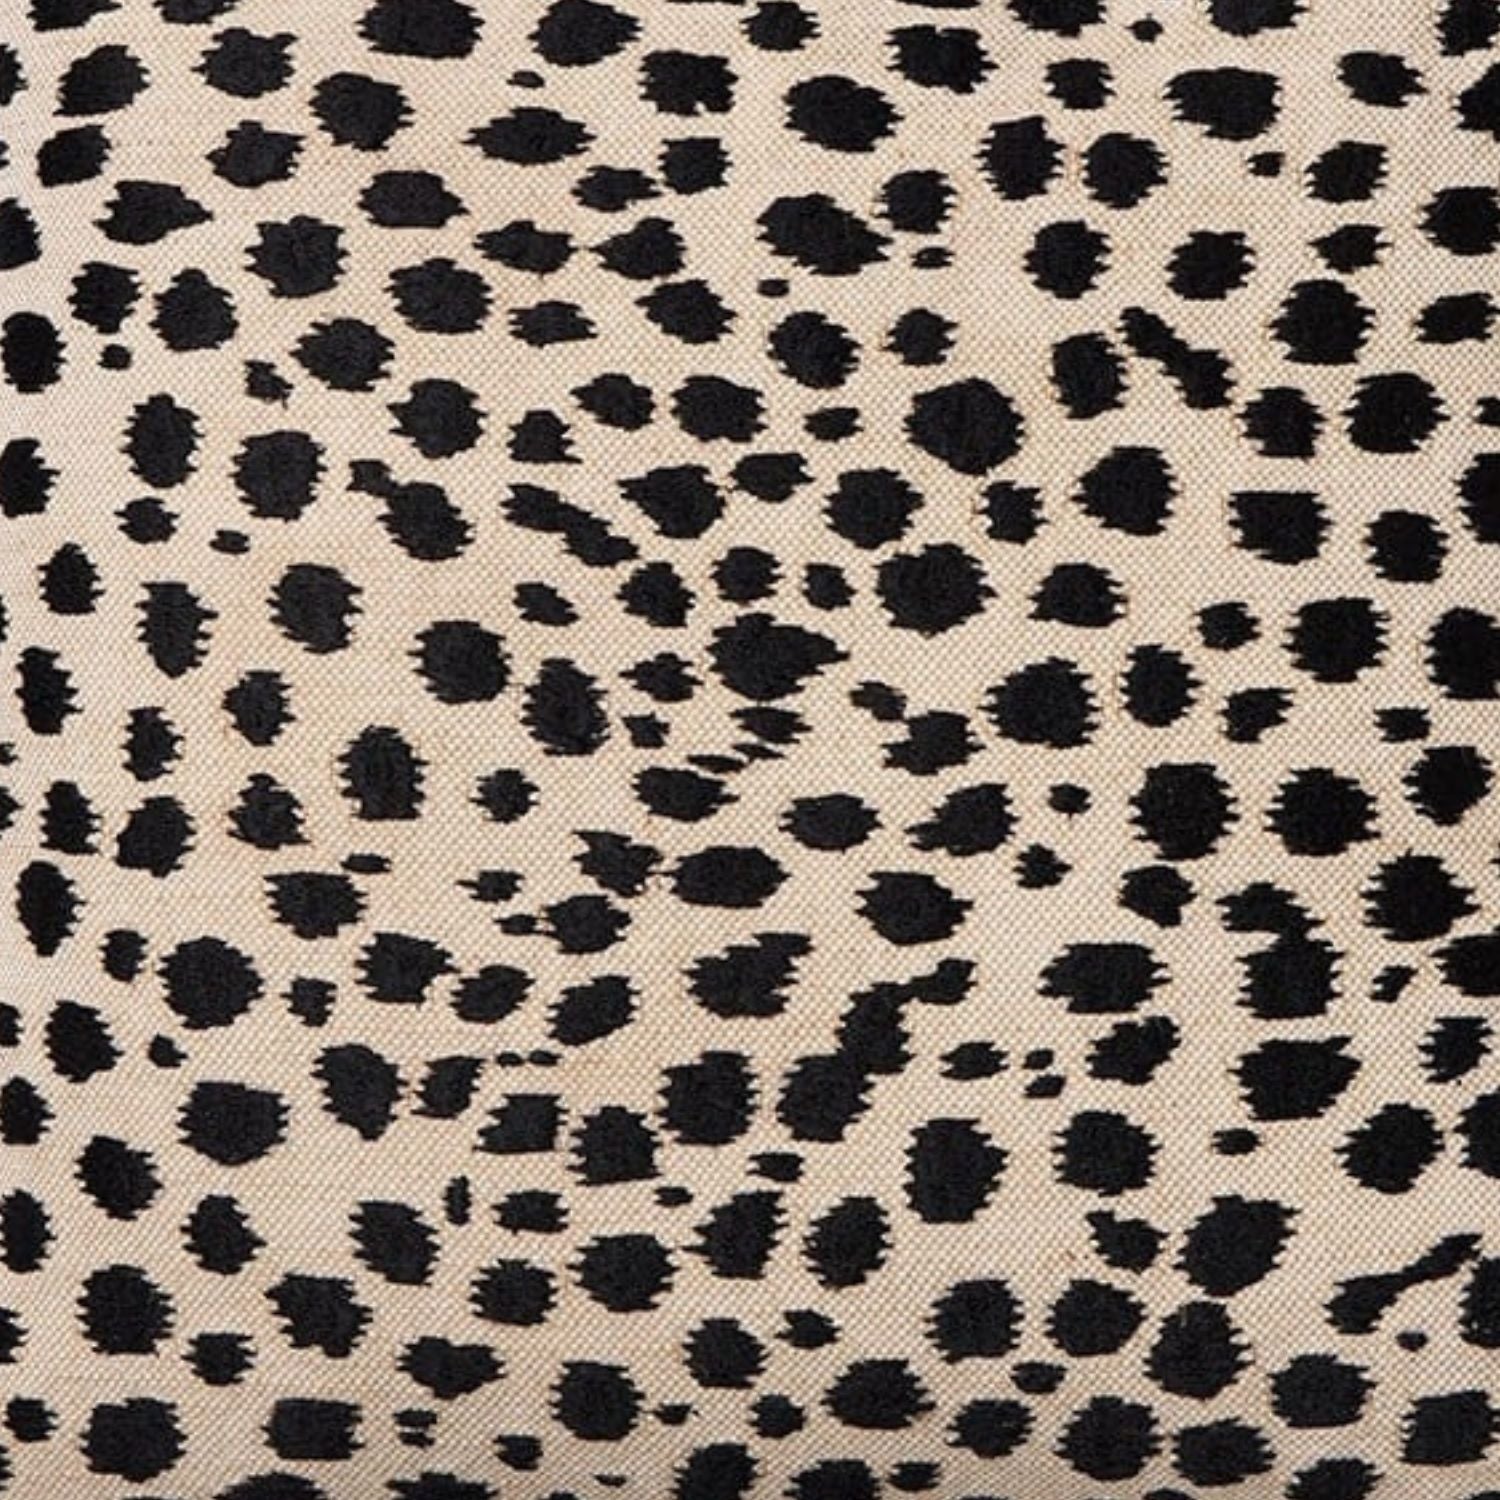 Leopard Print Cushion 50x50